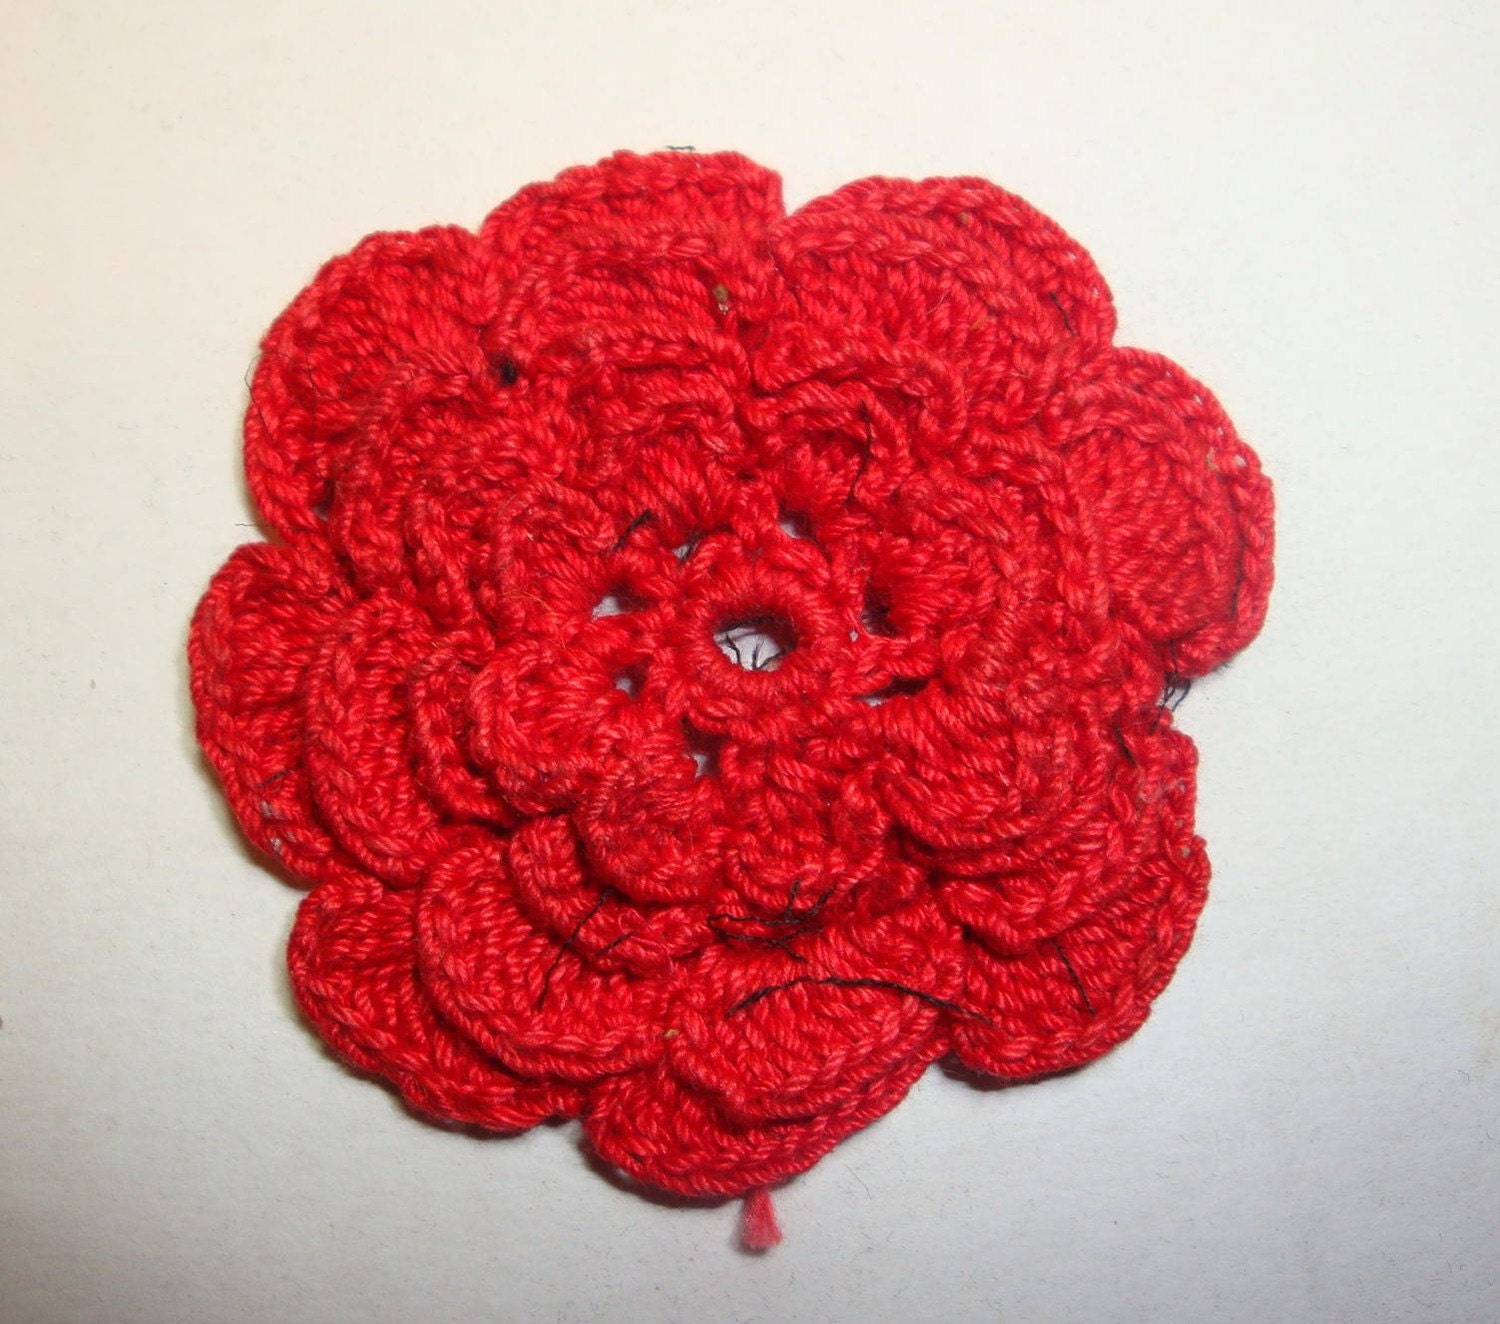 Vintage Red Crochet Flower Rosette Applique Sewing Crafting